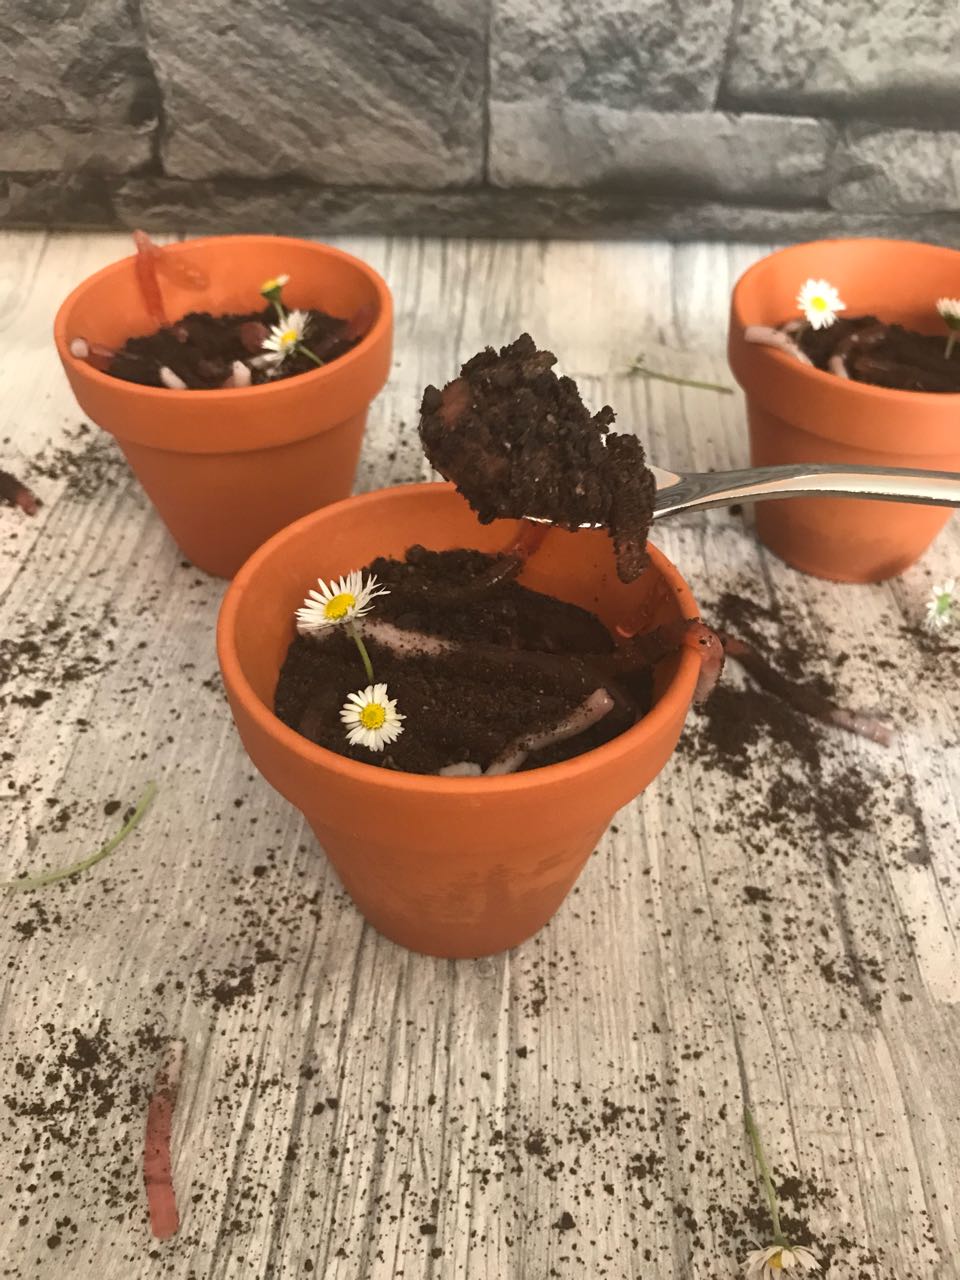 kiras_bakery: Blumentopf Pudding mit Würmern/ Halloween Woche